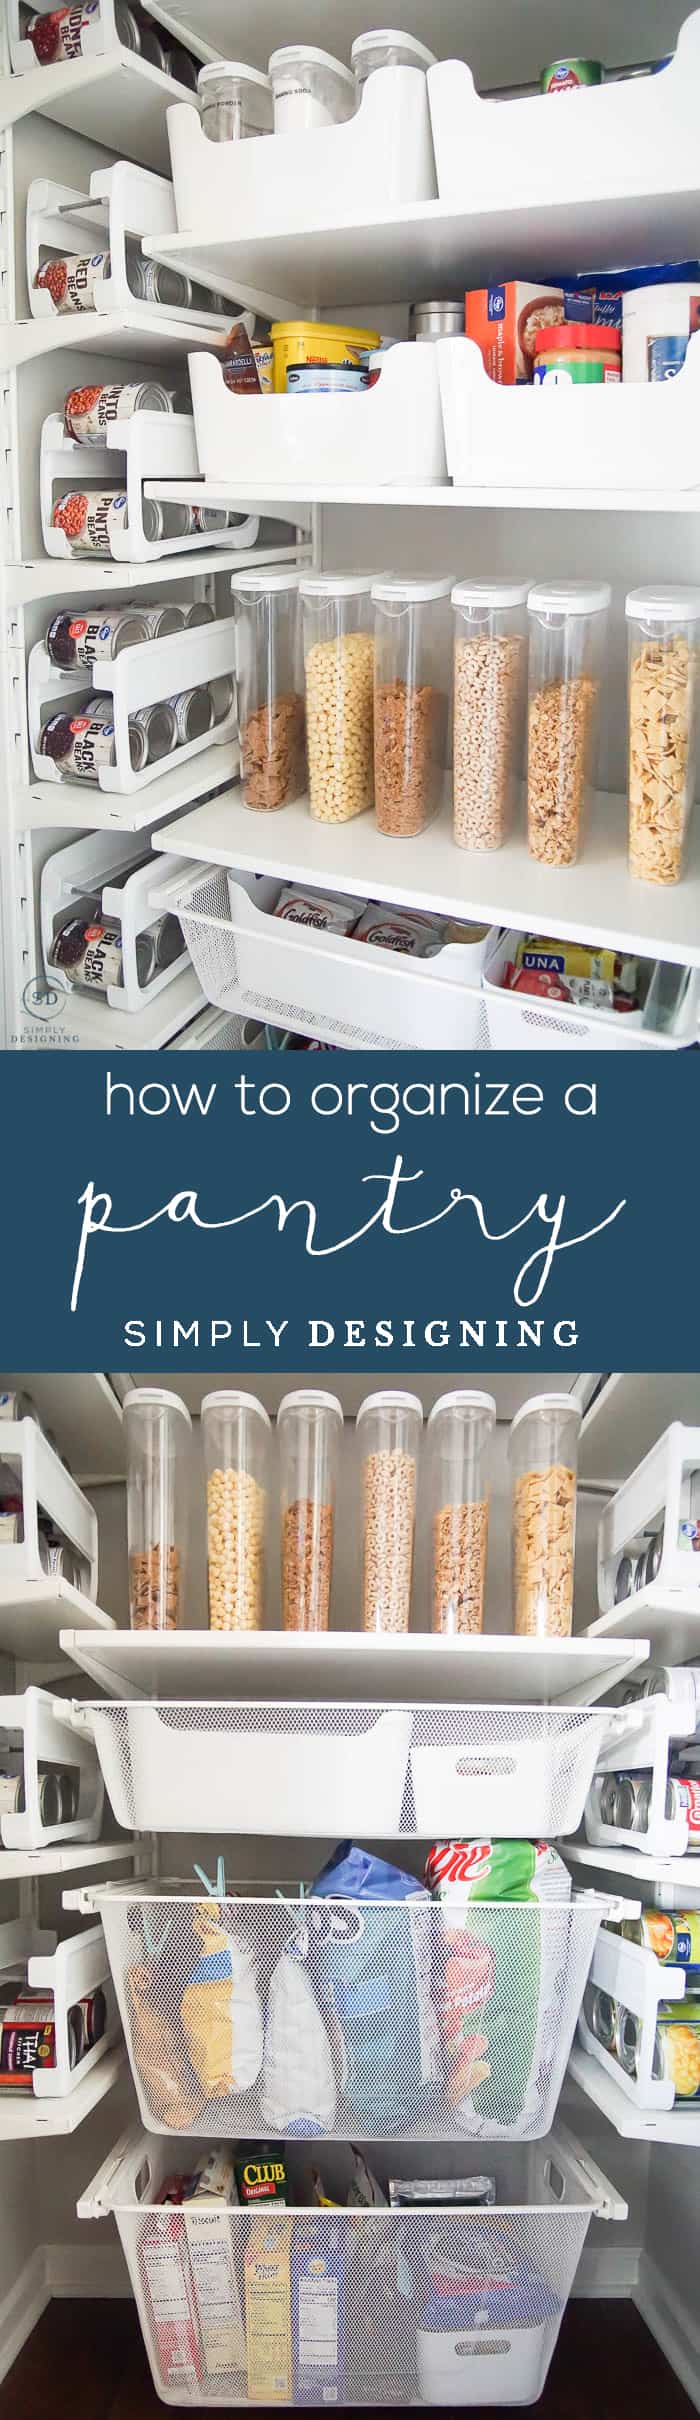 How to Organize a Small Pantry - DIY Pantry Organization Ideas - Organize Pantry